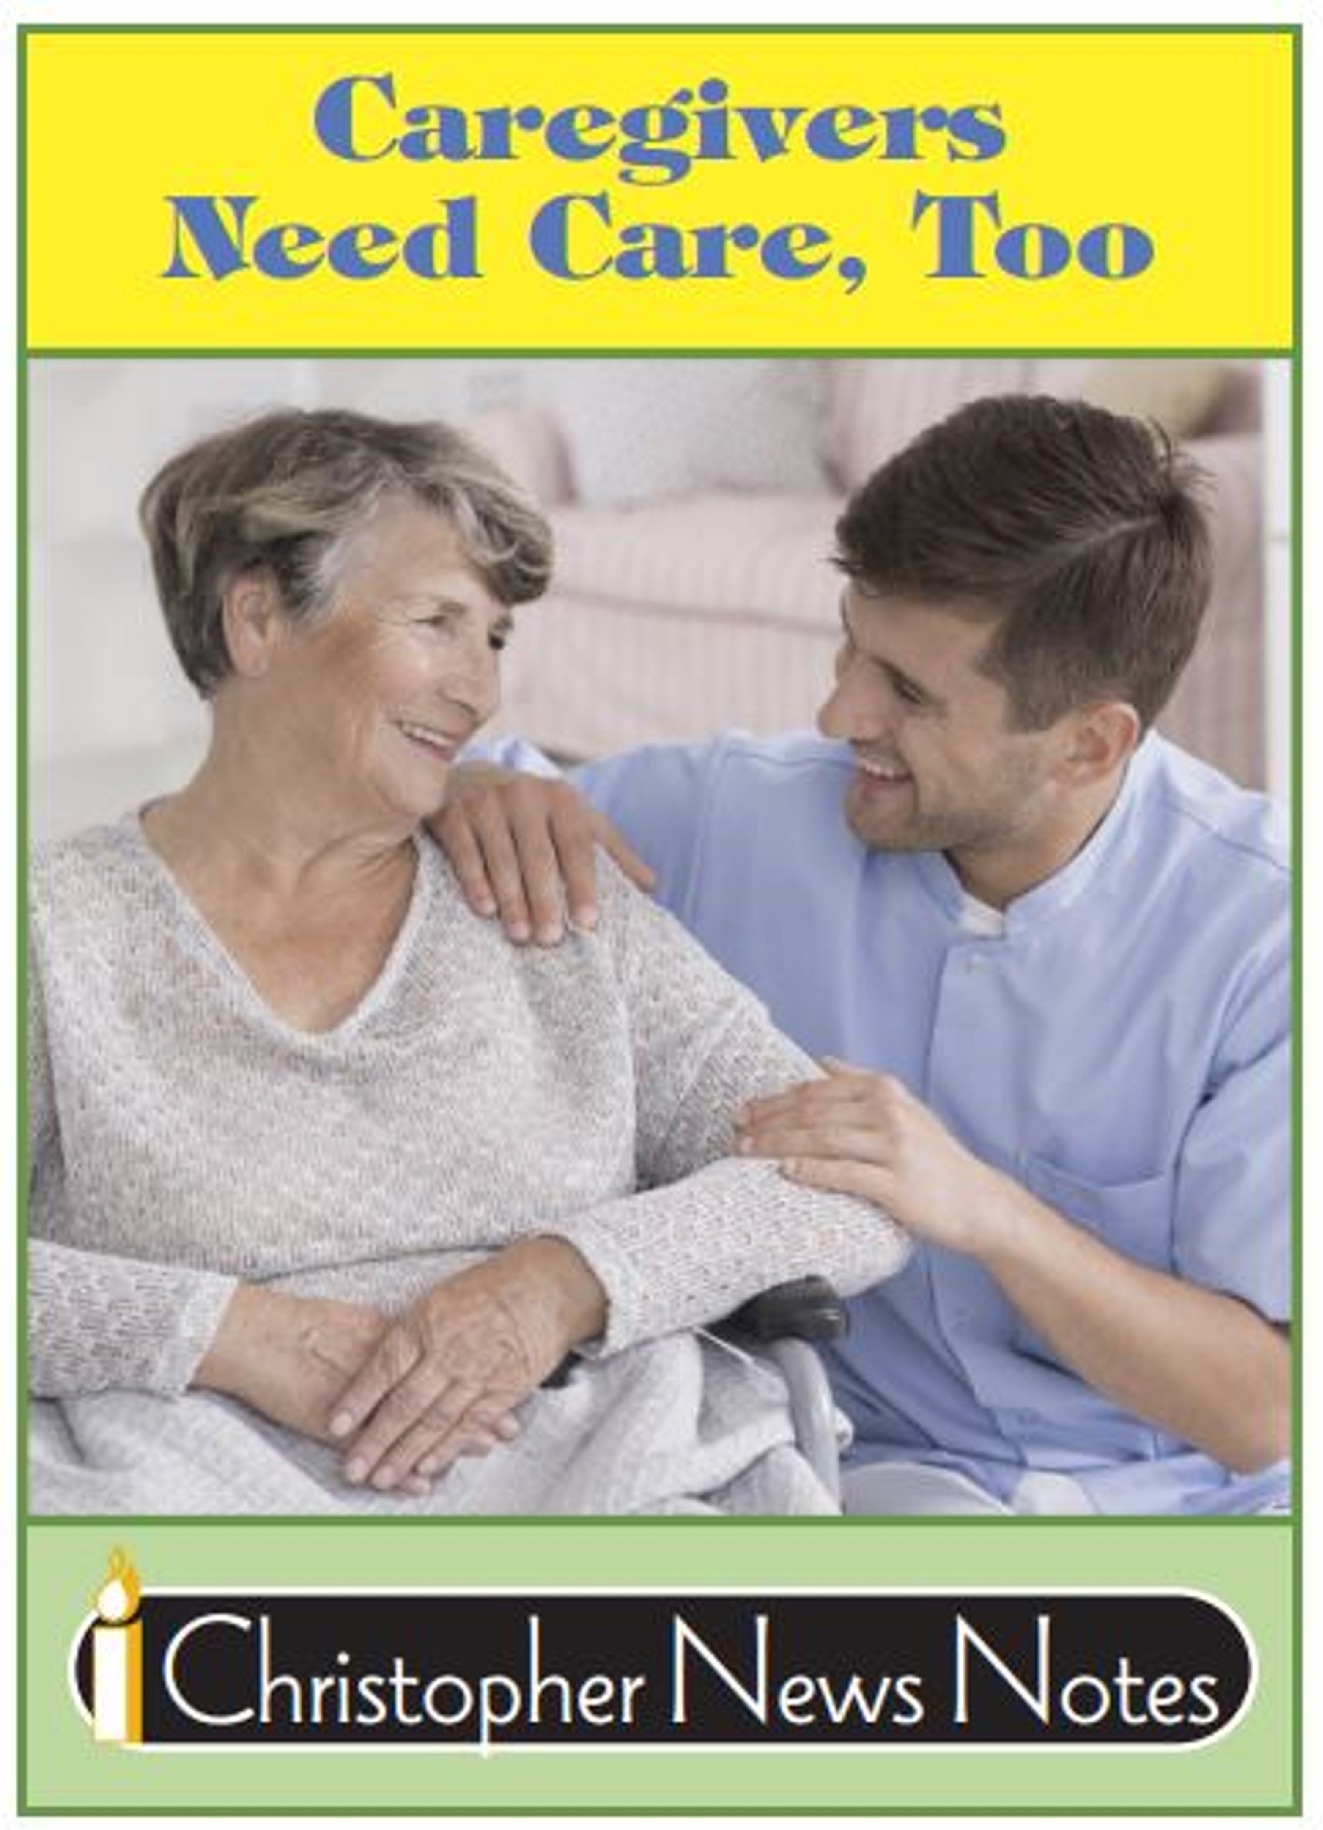 01 - Caregivers need Care, too . .